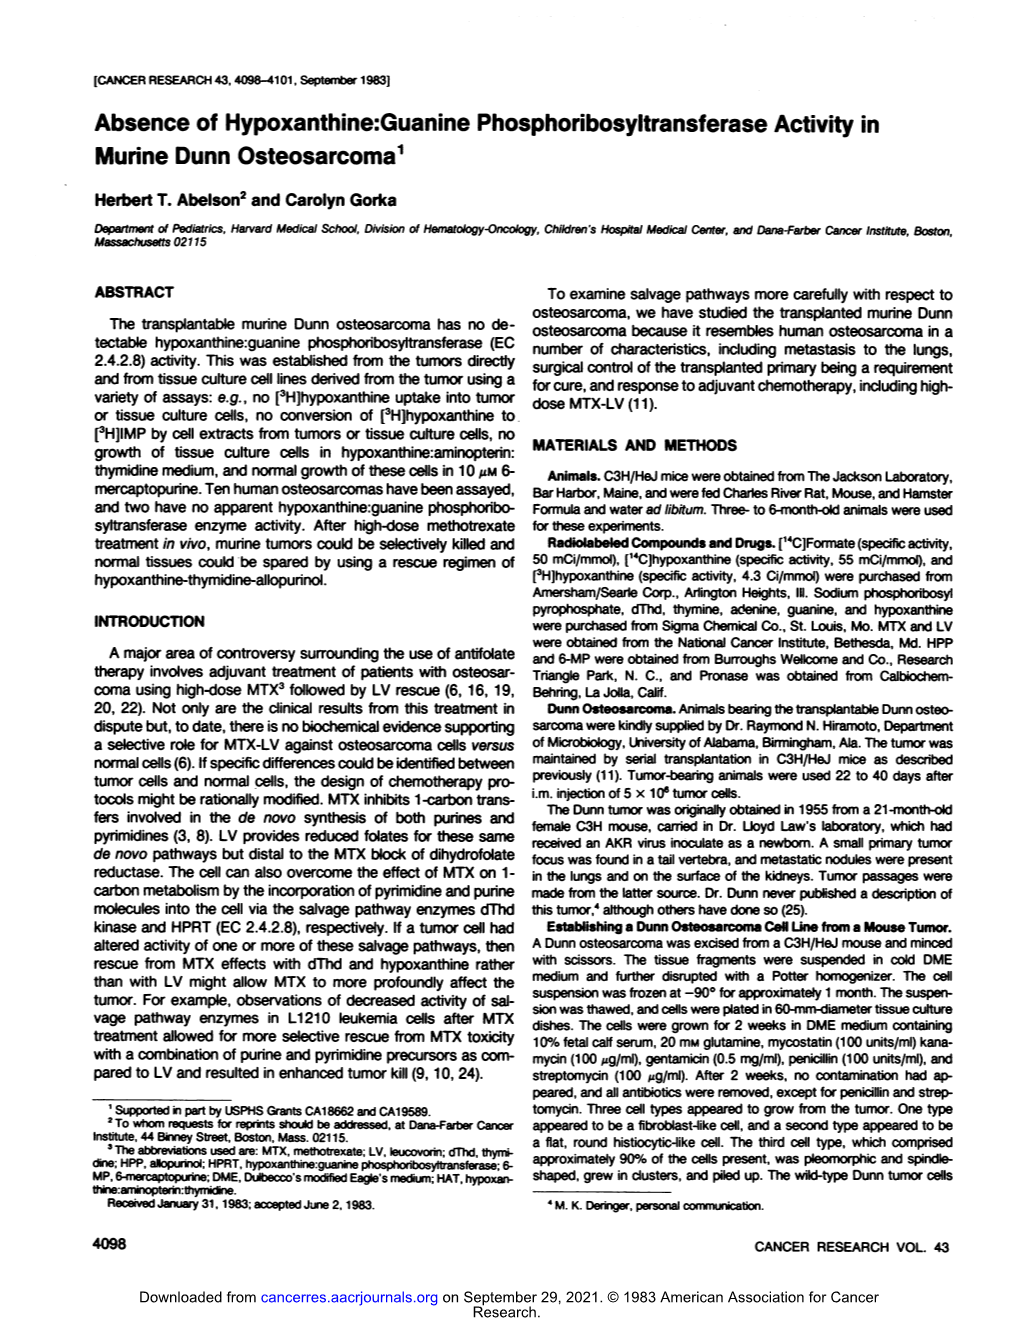 Absence of Hypoxanthine:Guanine Phosphoribosyltransferase Activity in Murine Dunn Osteosarcoma1